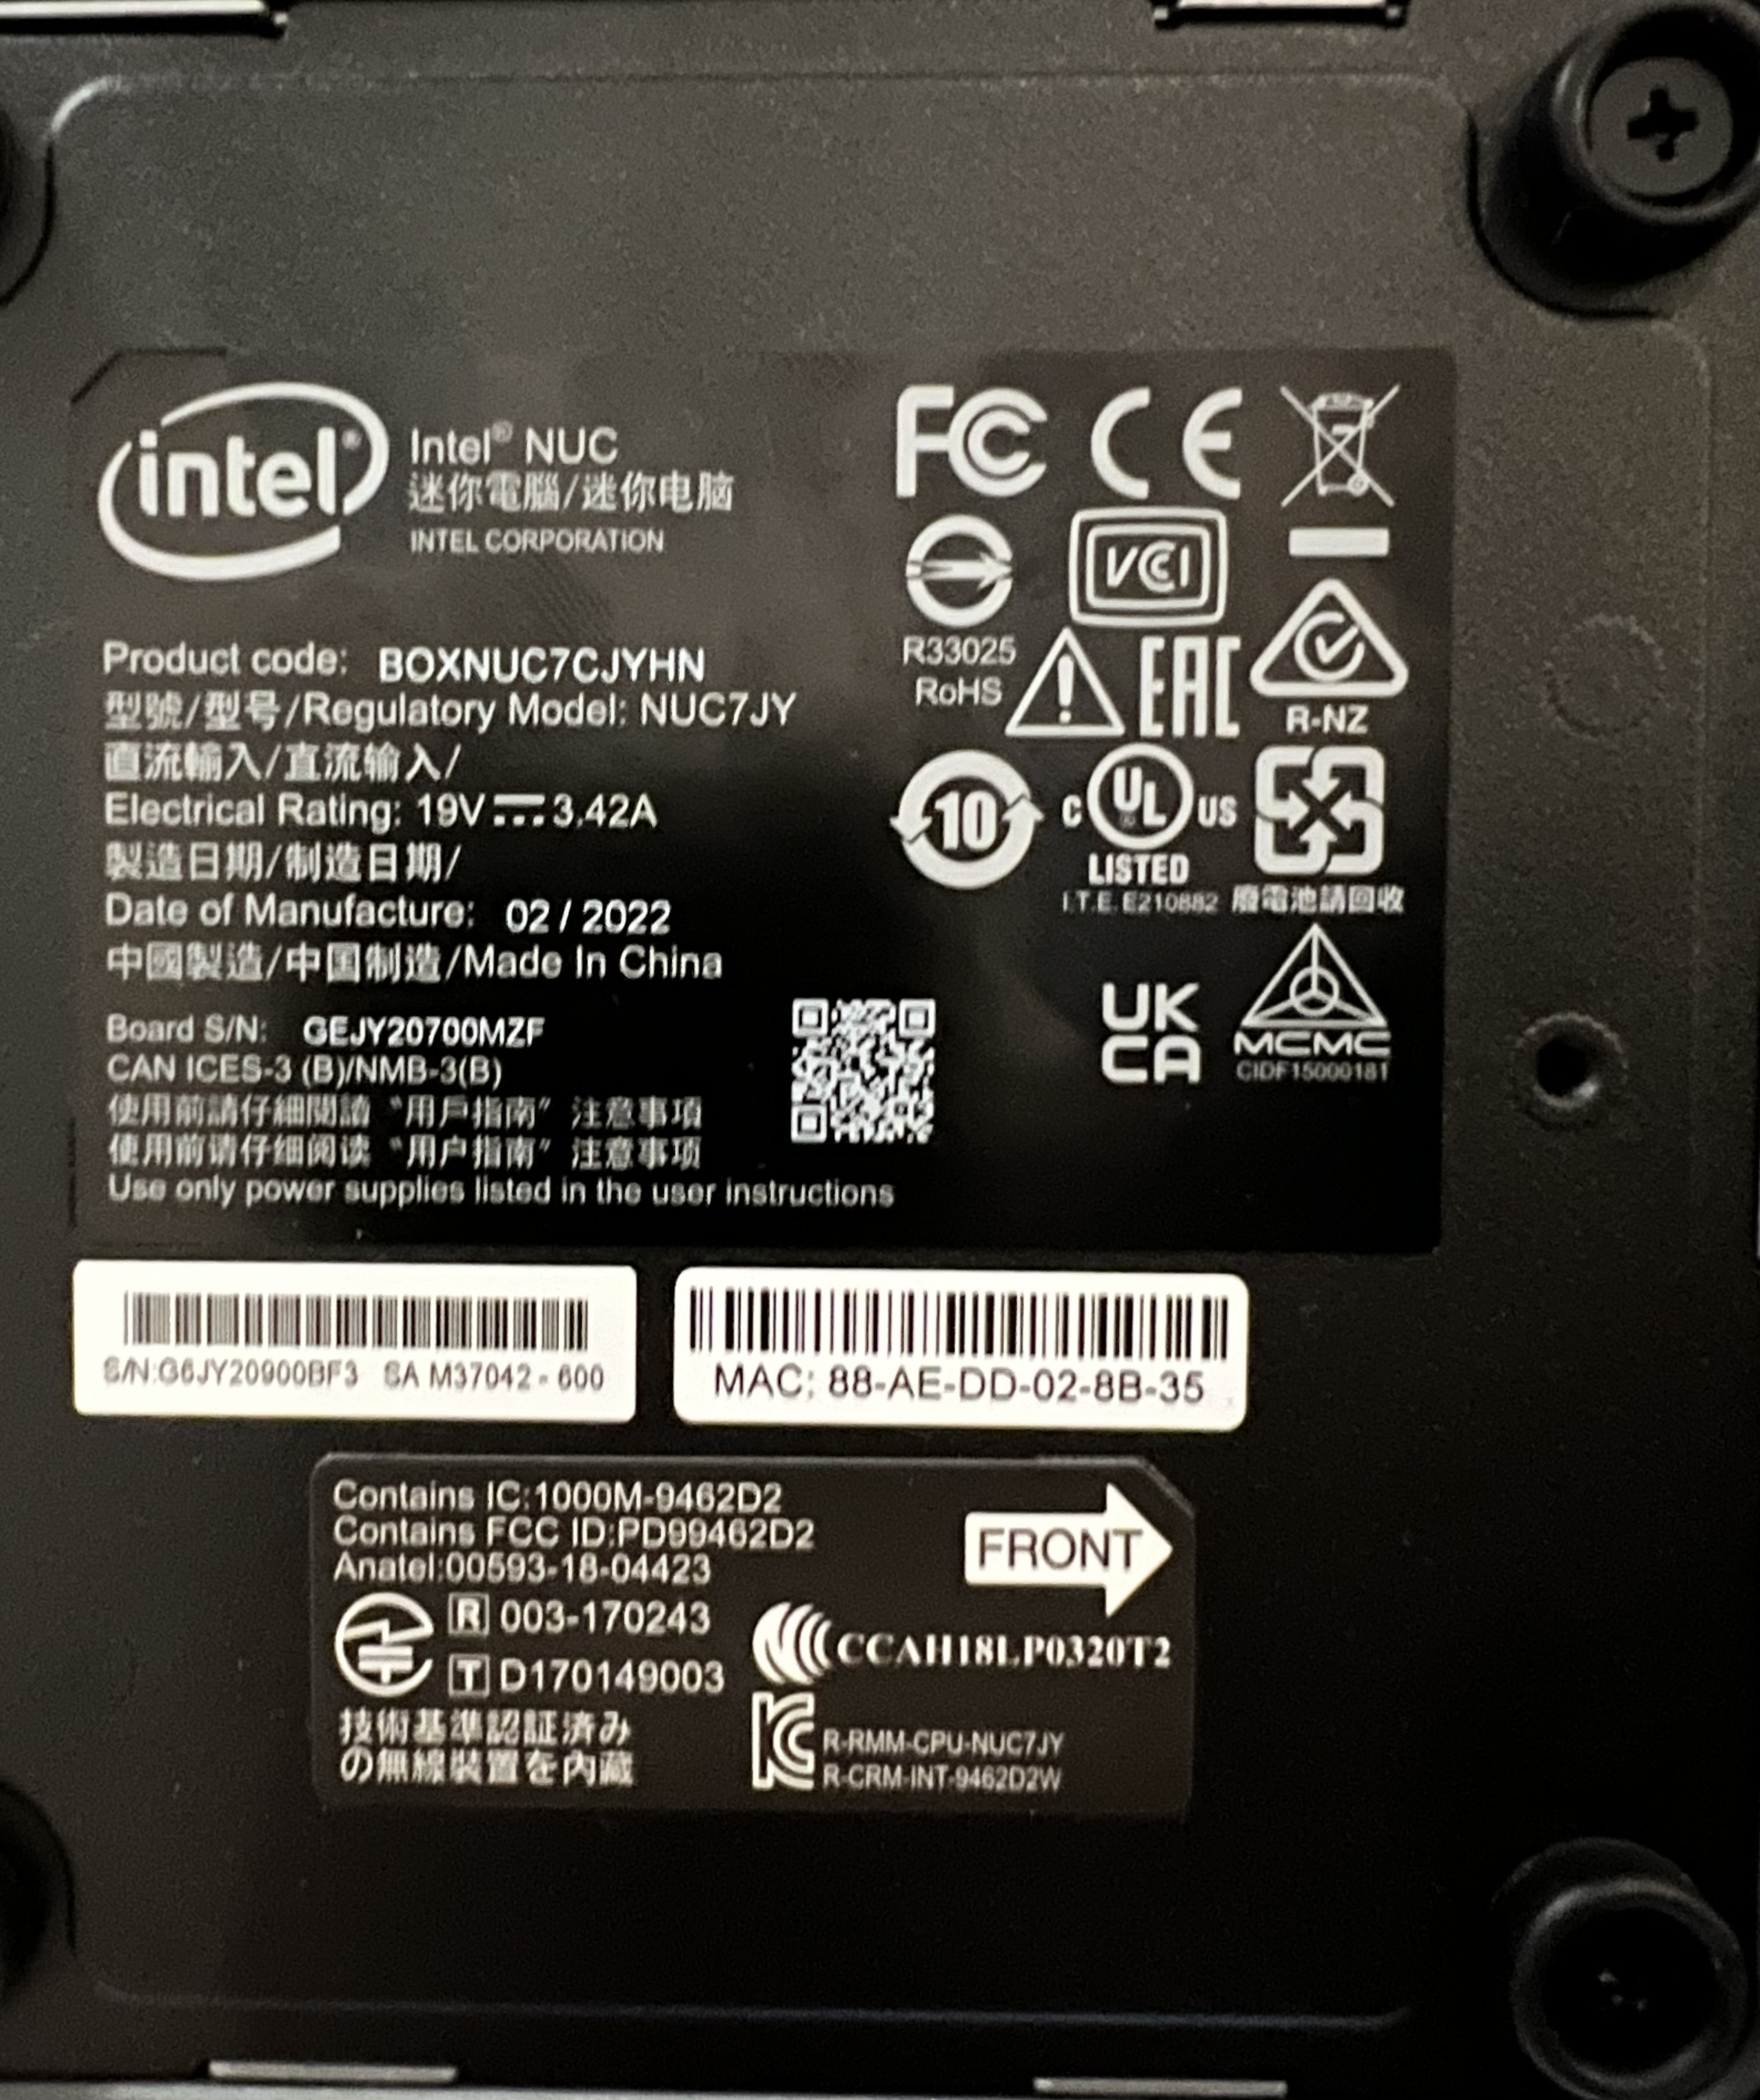 Intel Nuc will not boot from USB - Intel Community